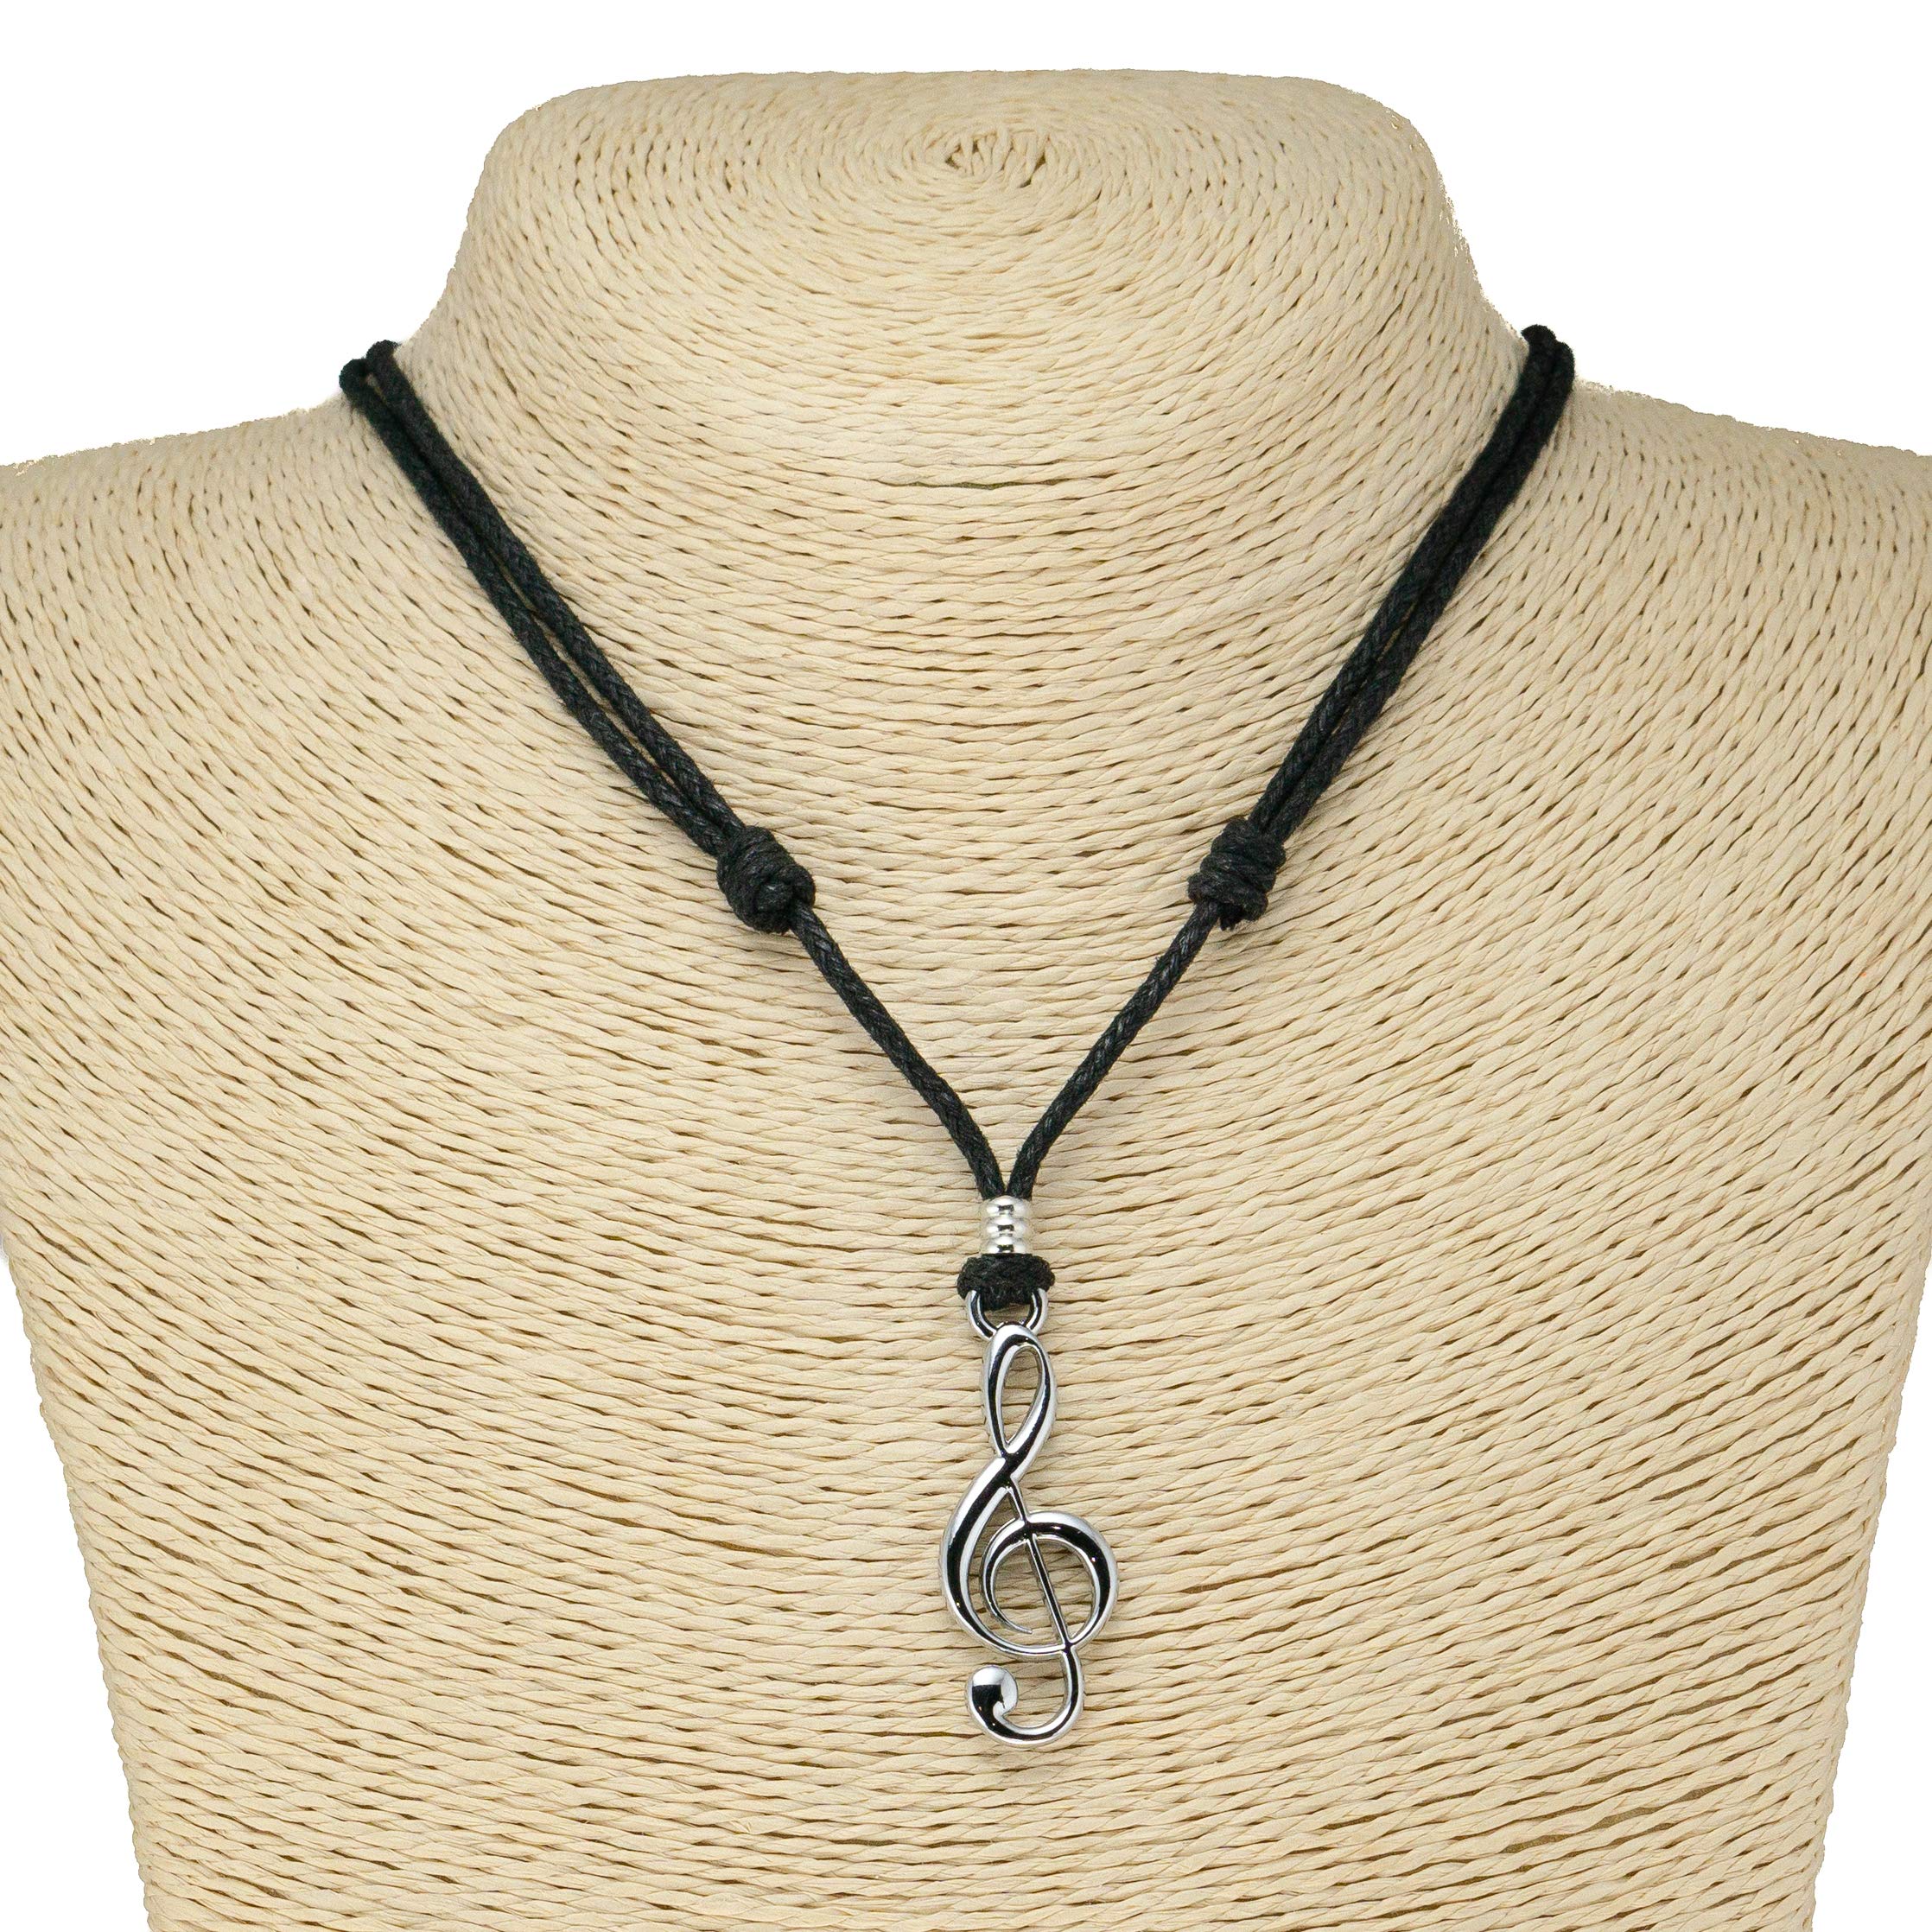 Treble Clef Pendant on Adjustable Rope Necklace